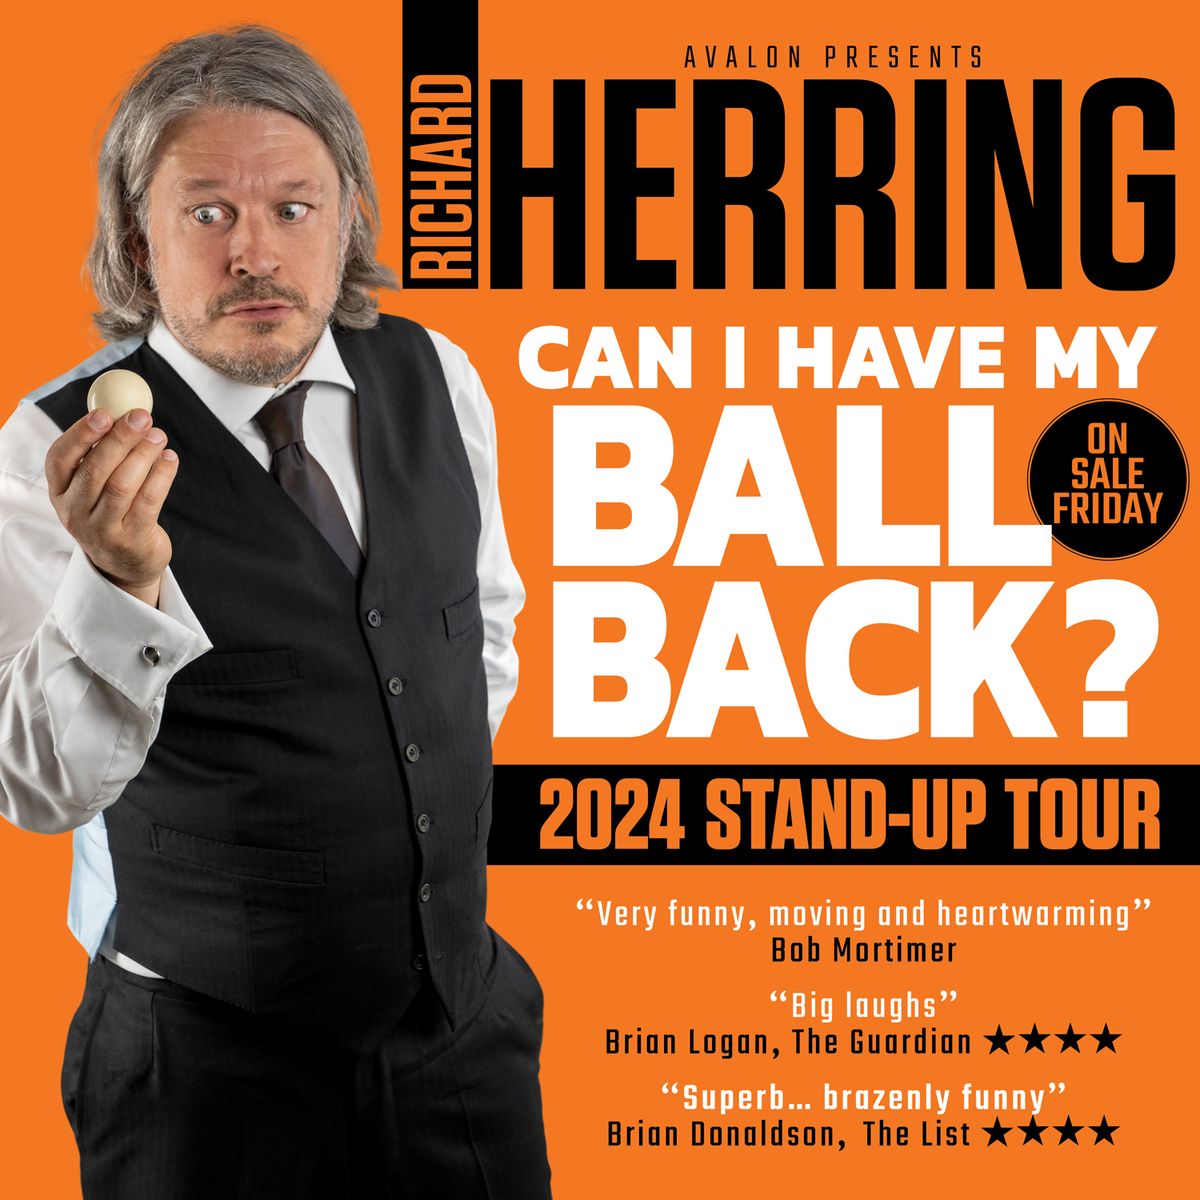 Richard Herring - Can I Have My Ball Back?